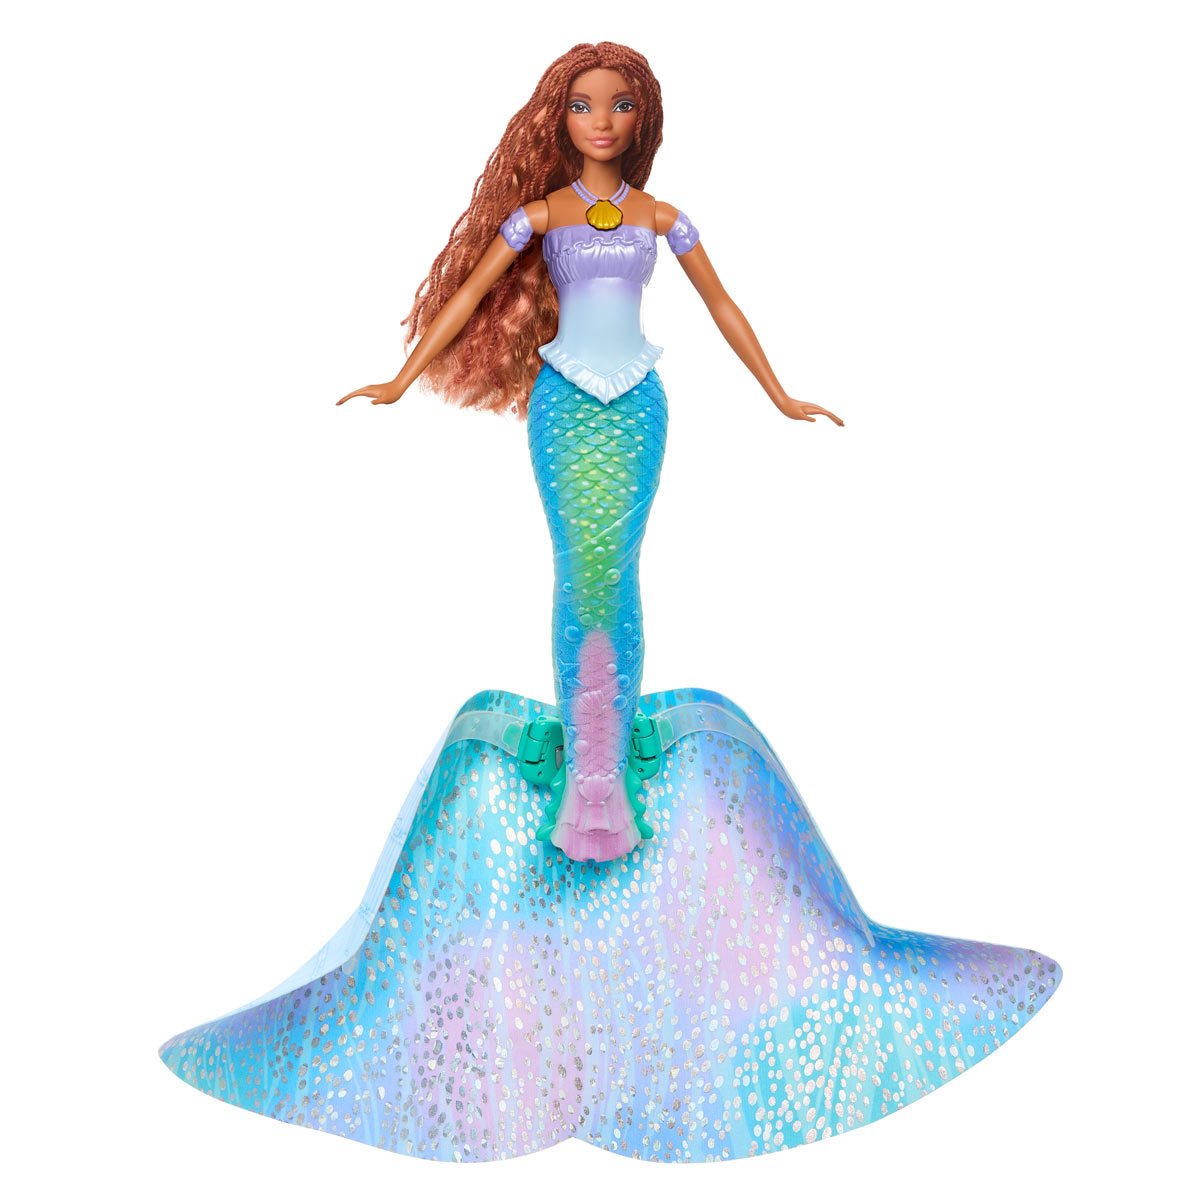 The Little Mermaid Transforming Ariel Doll